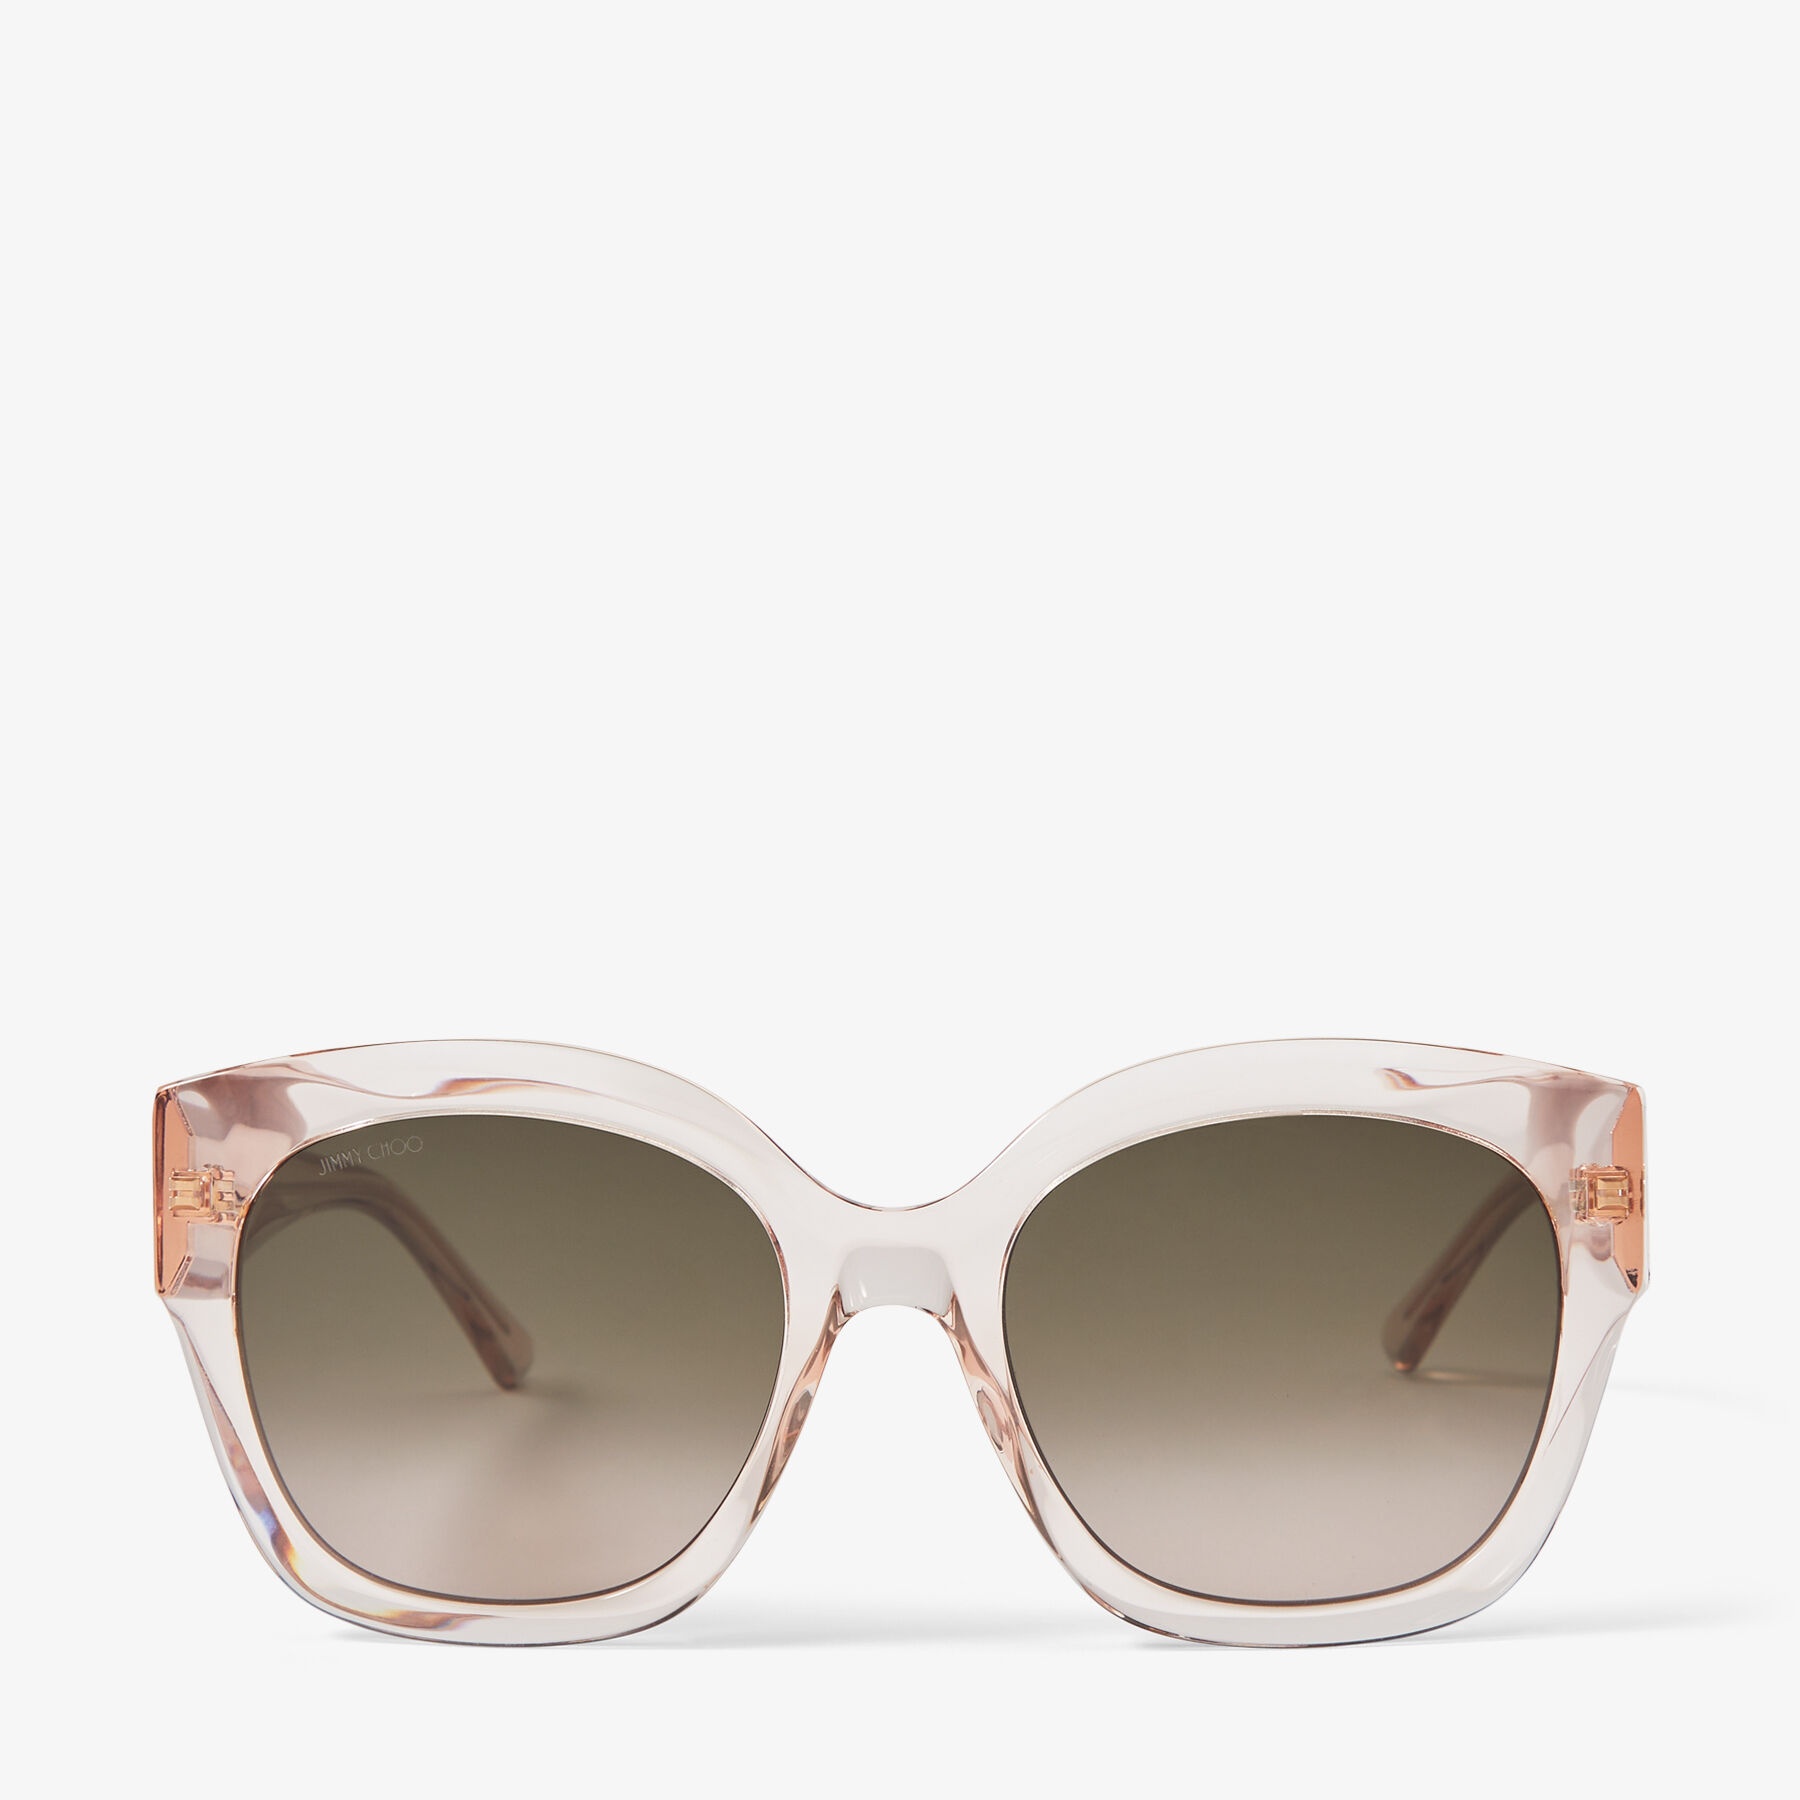 Leela
Nude Square Frame Sunglasses with Glitter - 1